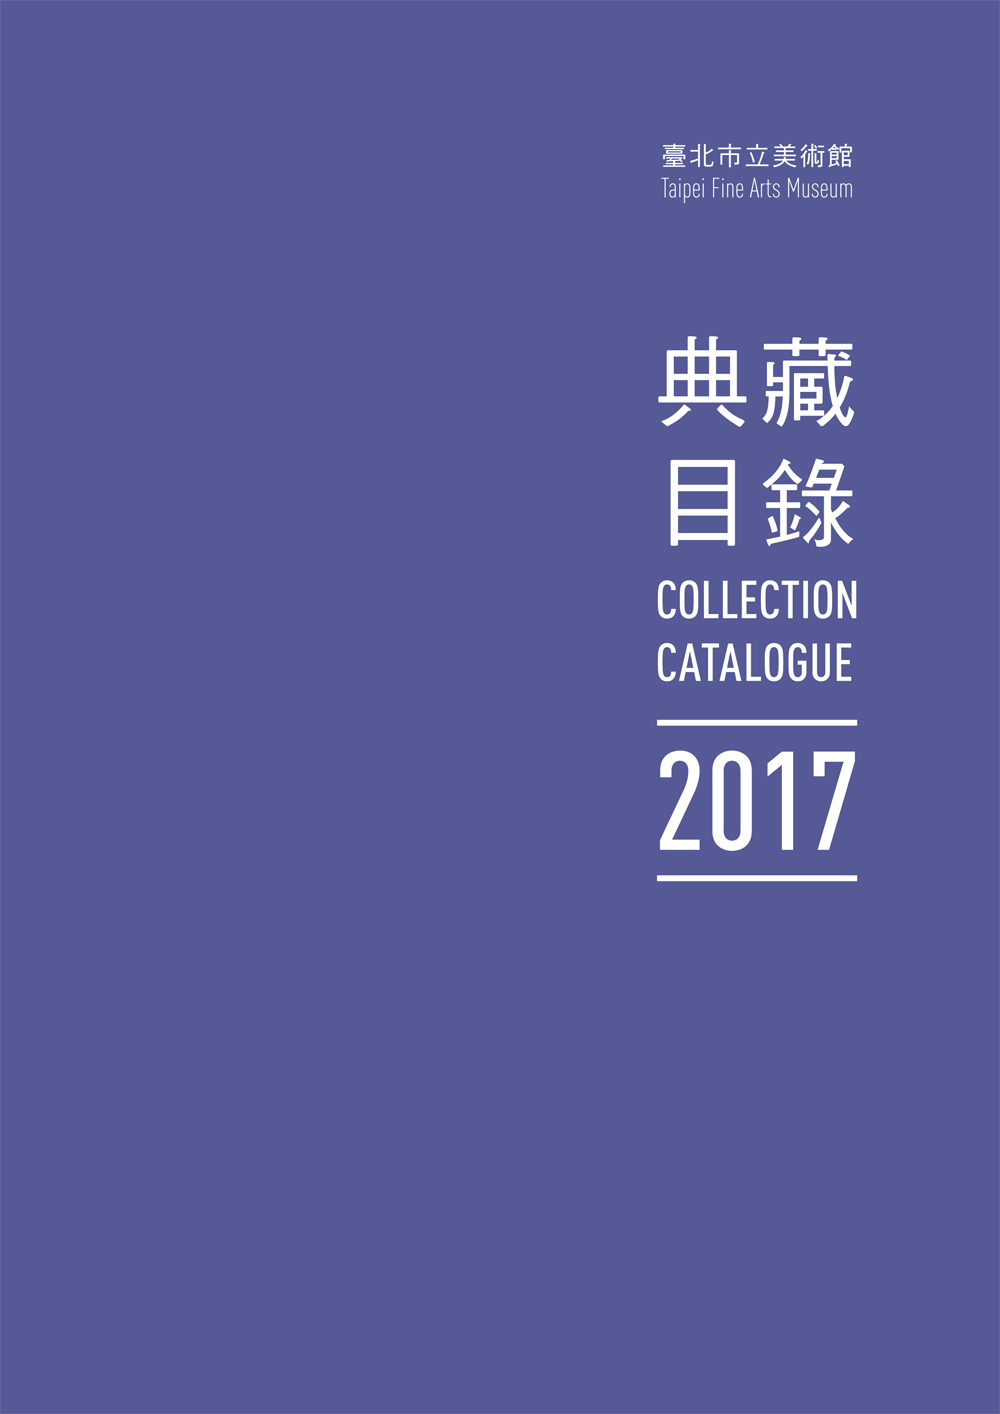 Collection Catalogue 2017 的圖說